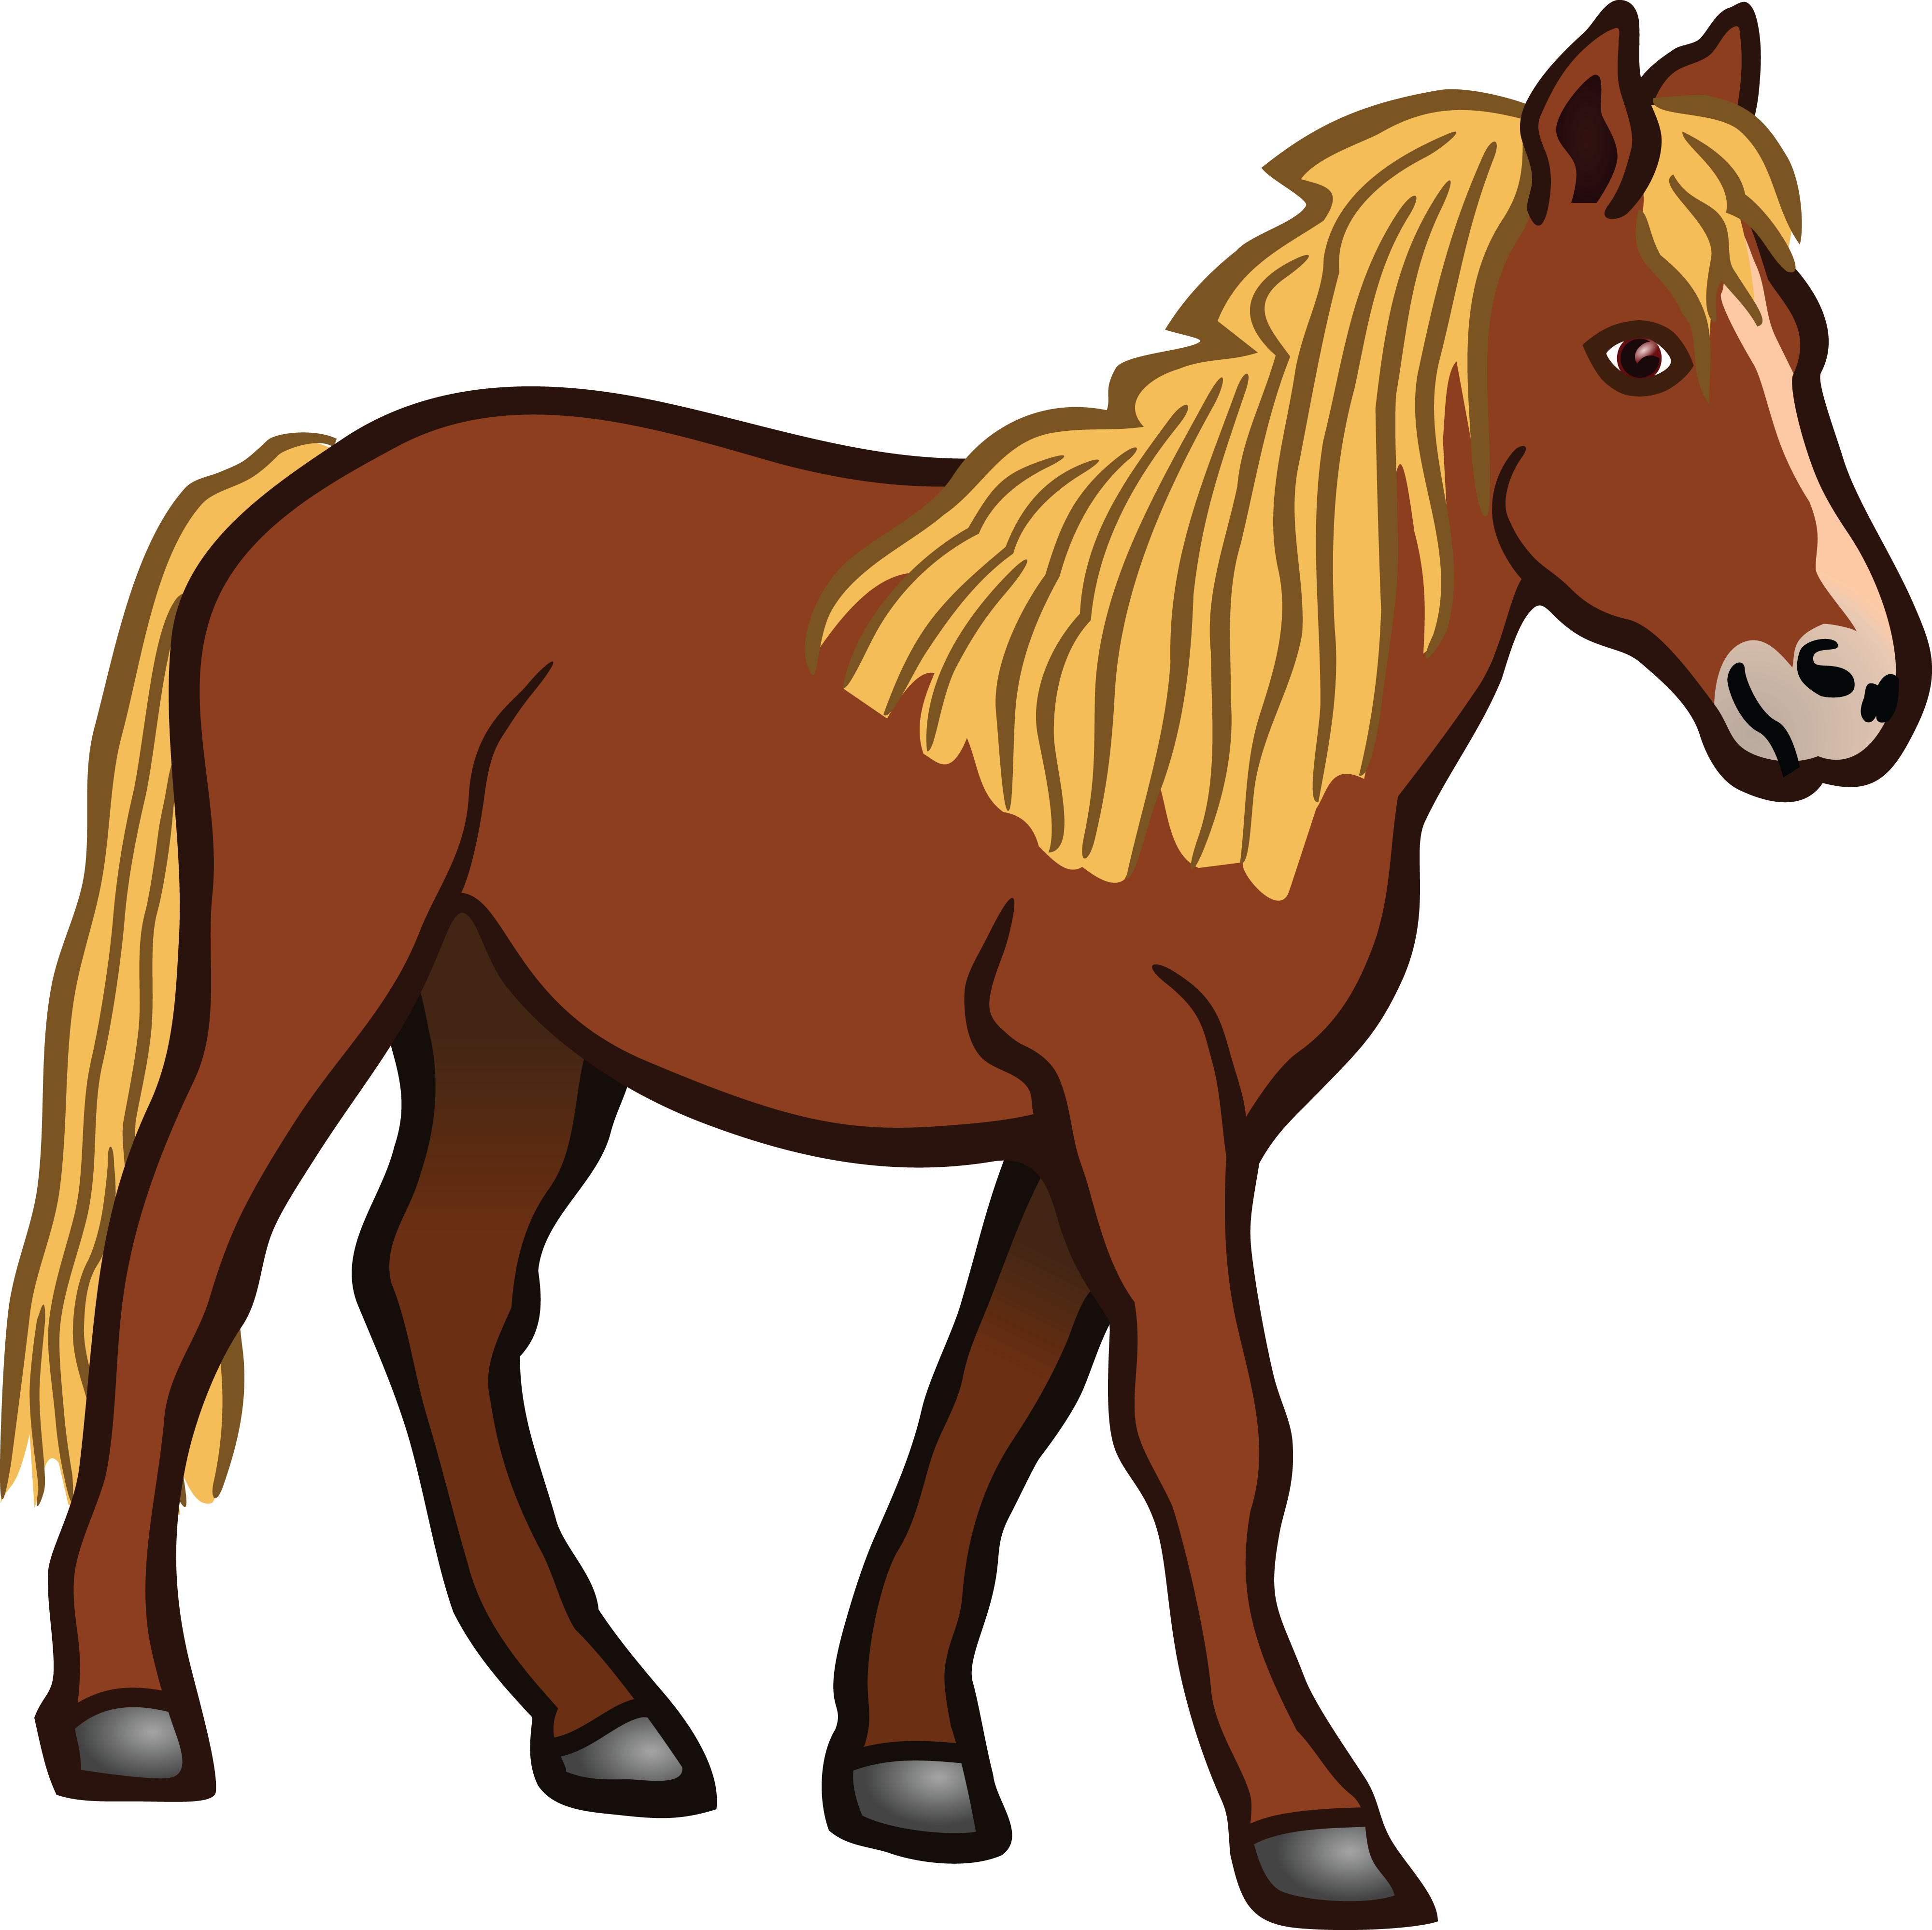 Horse Illustration In Children'S Book